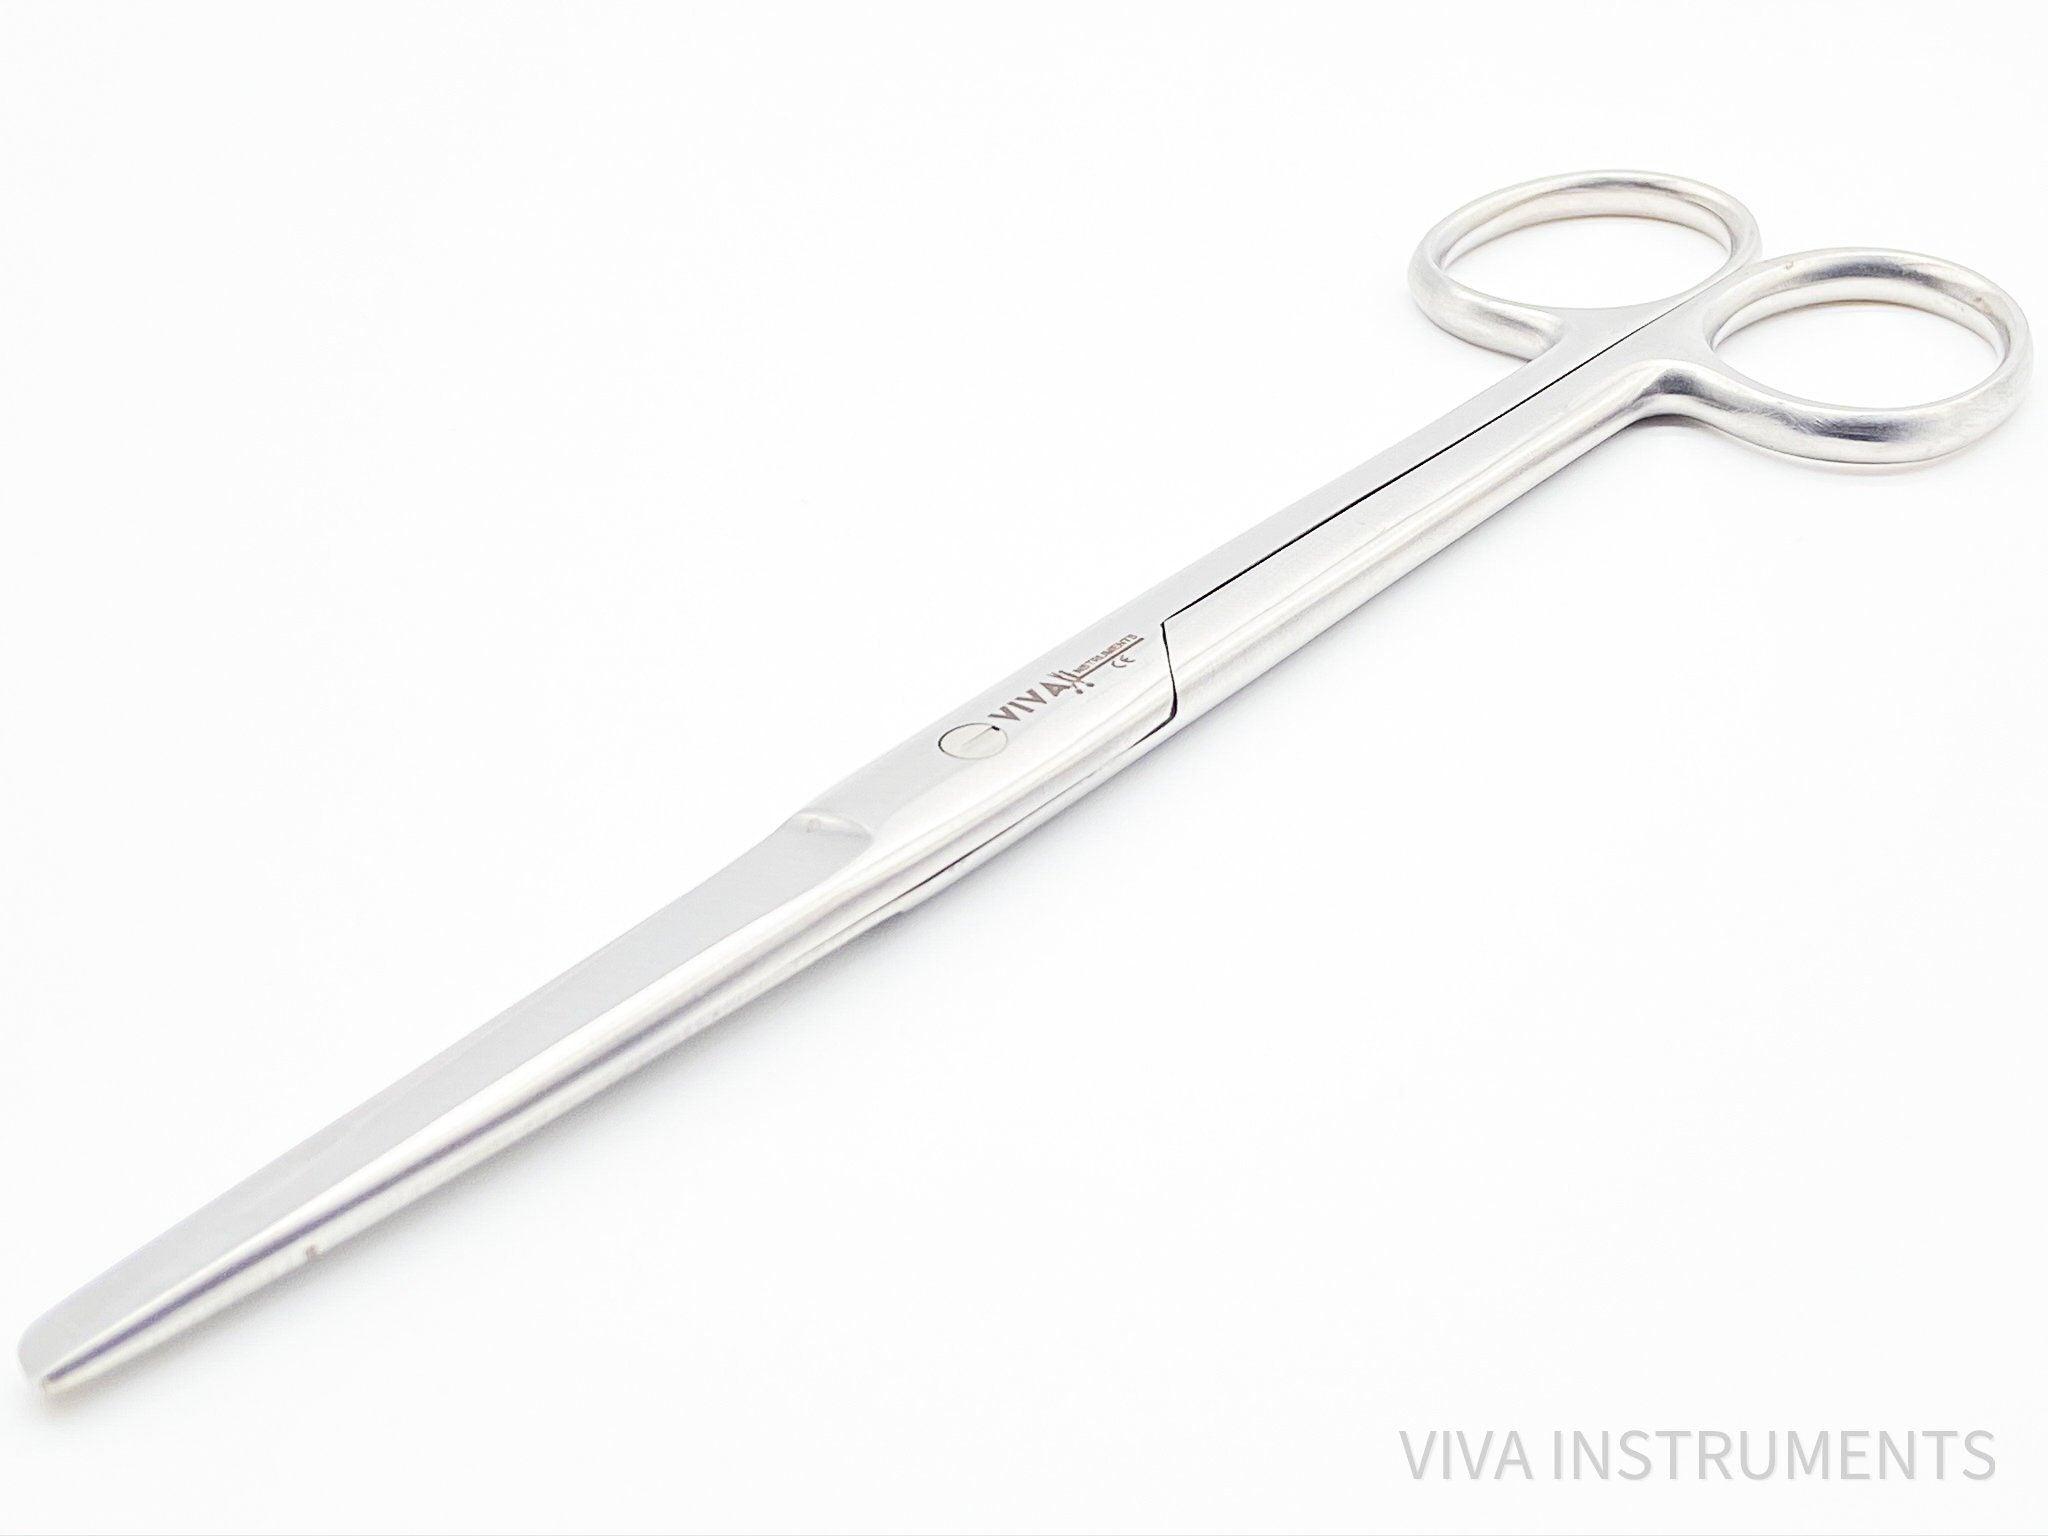 Scissor - Dressing Felt Scissor 18cm Blunt Sharp - Surgical Podiatry Instruments